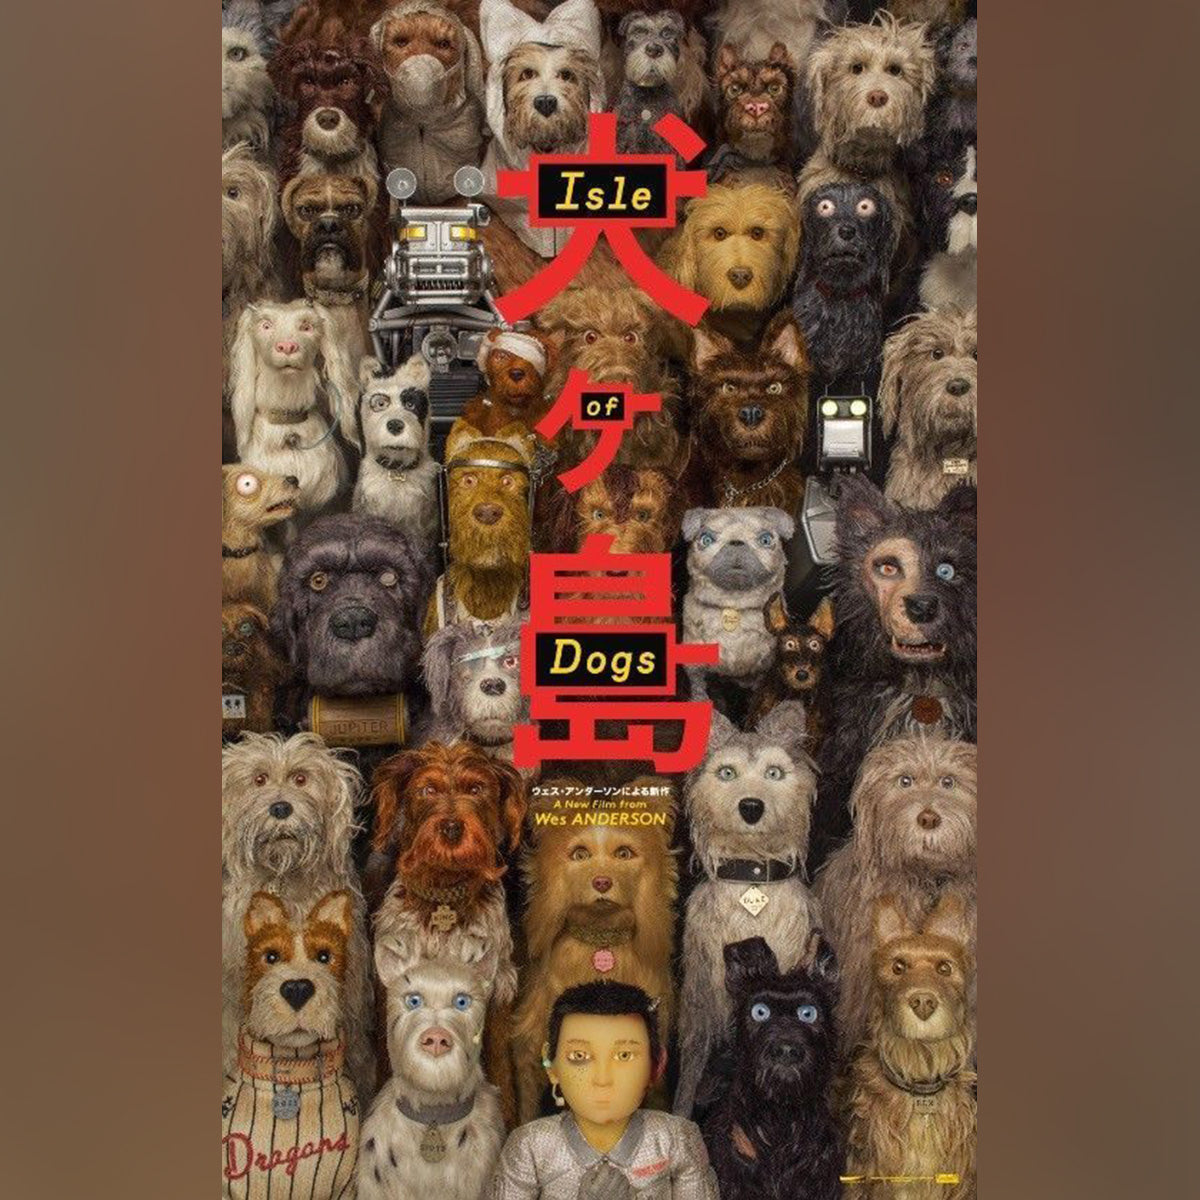 Original Movie Poster of Isle Of Dogs (2018)